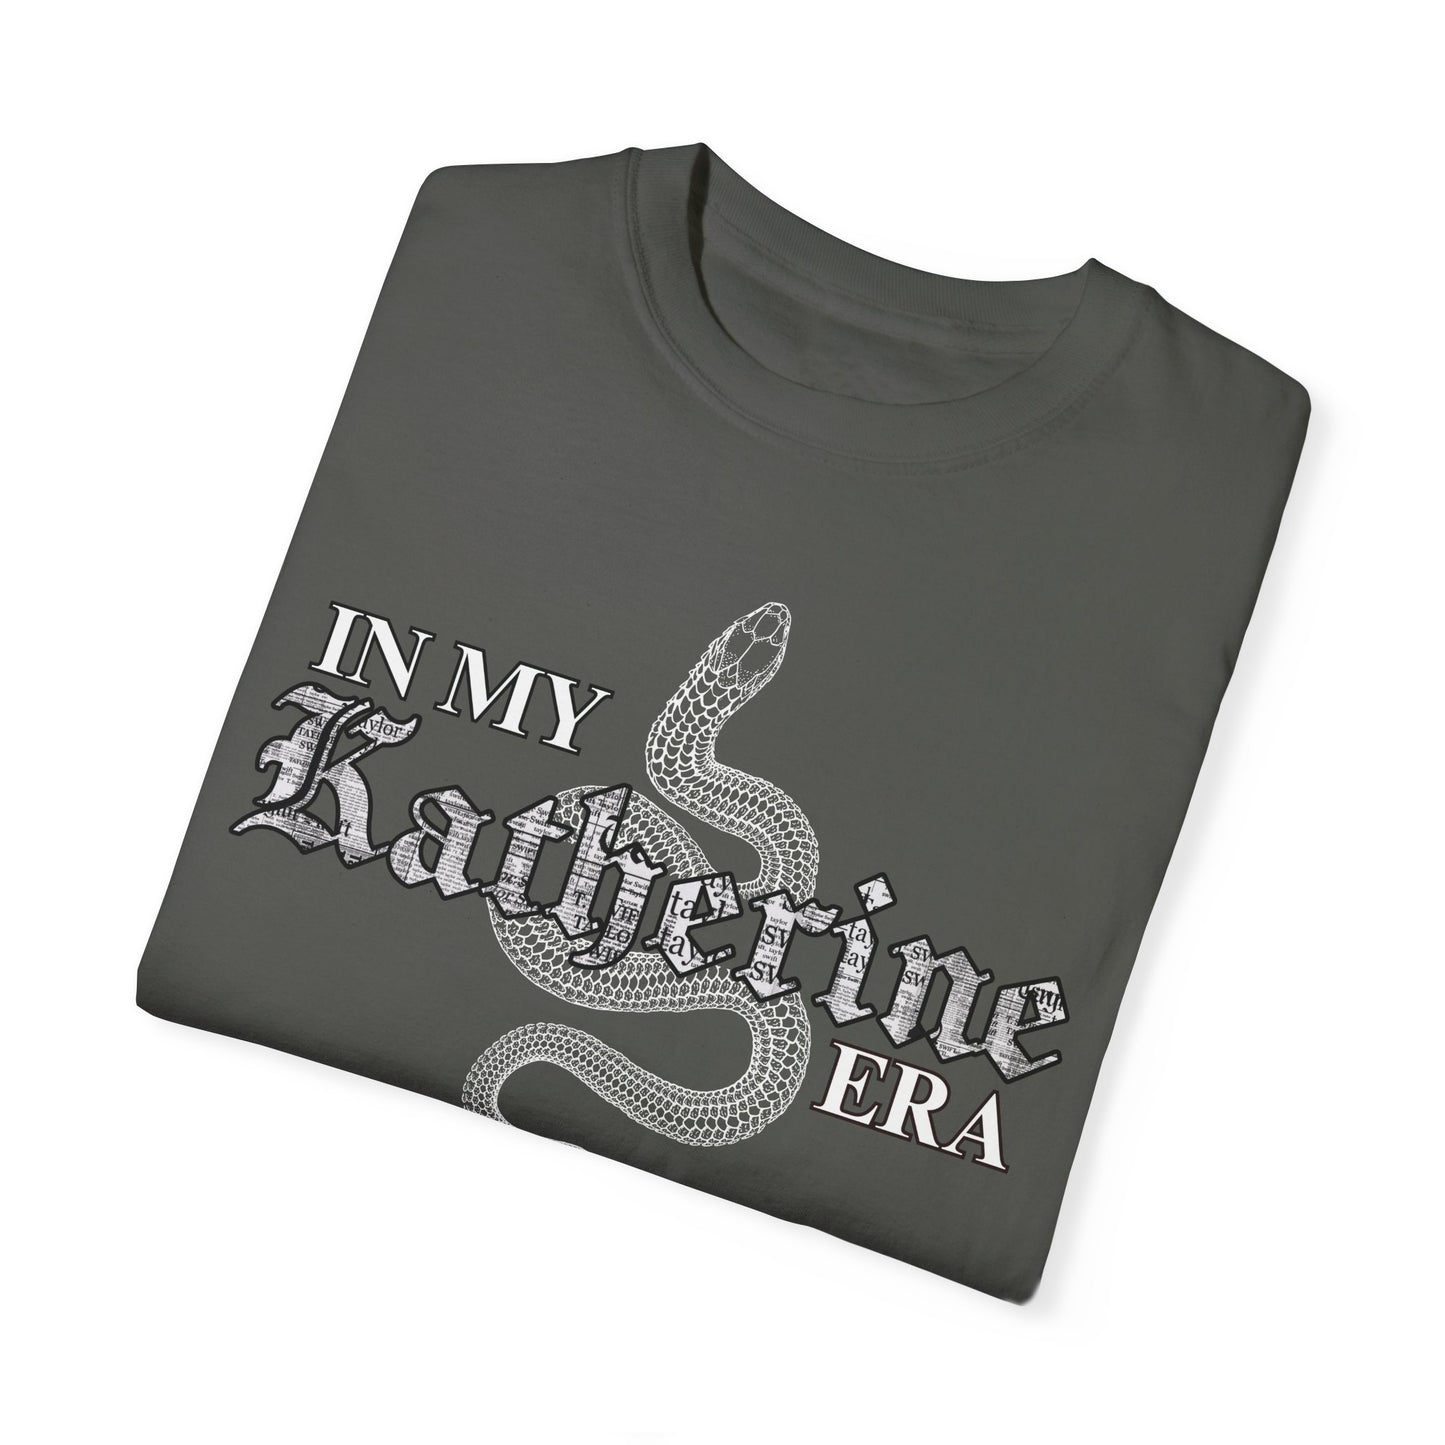 In my Katherine Era shirt